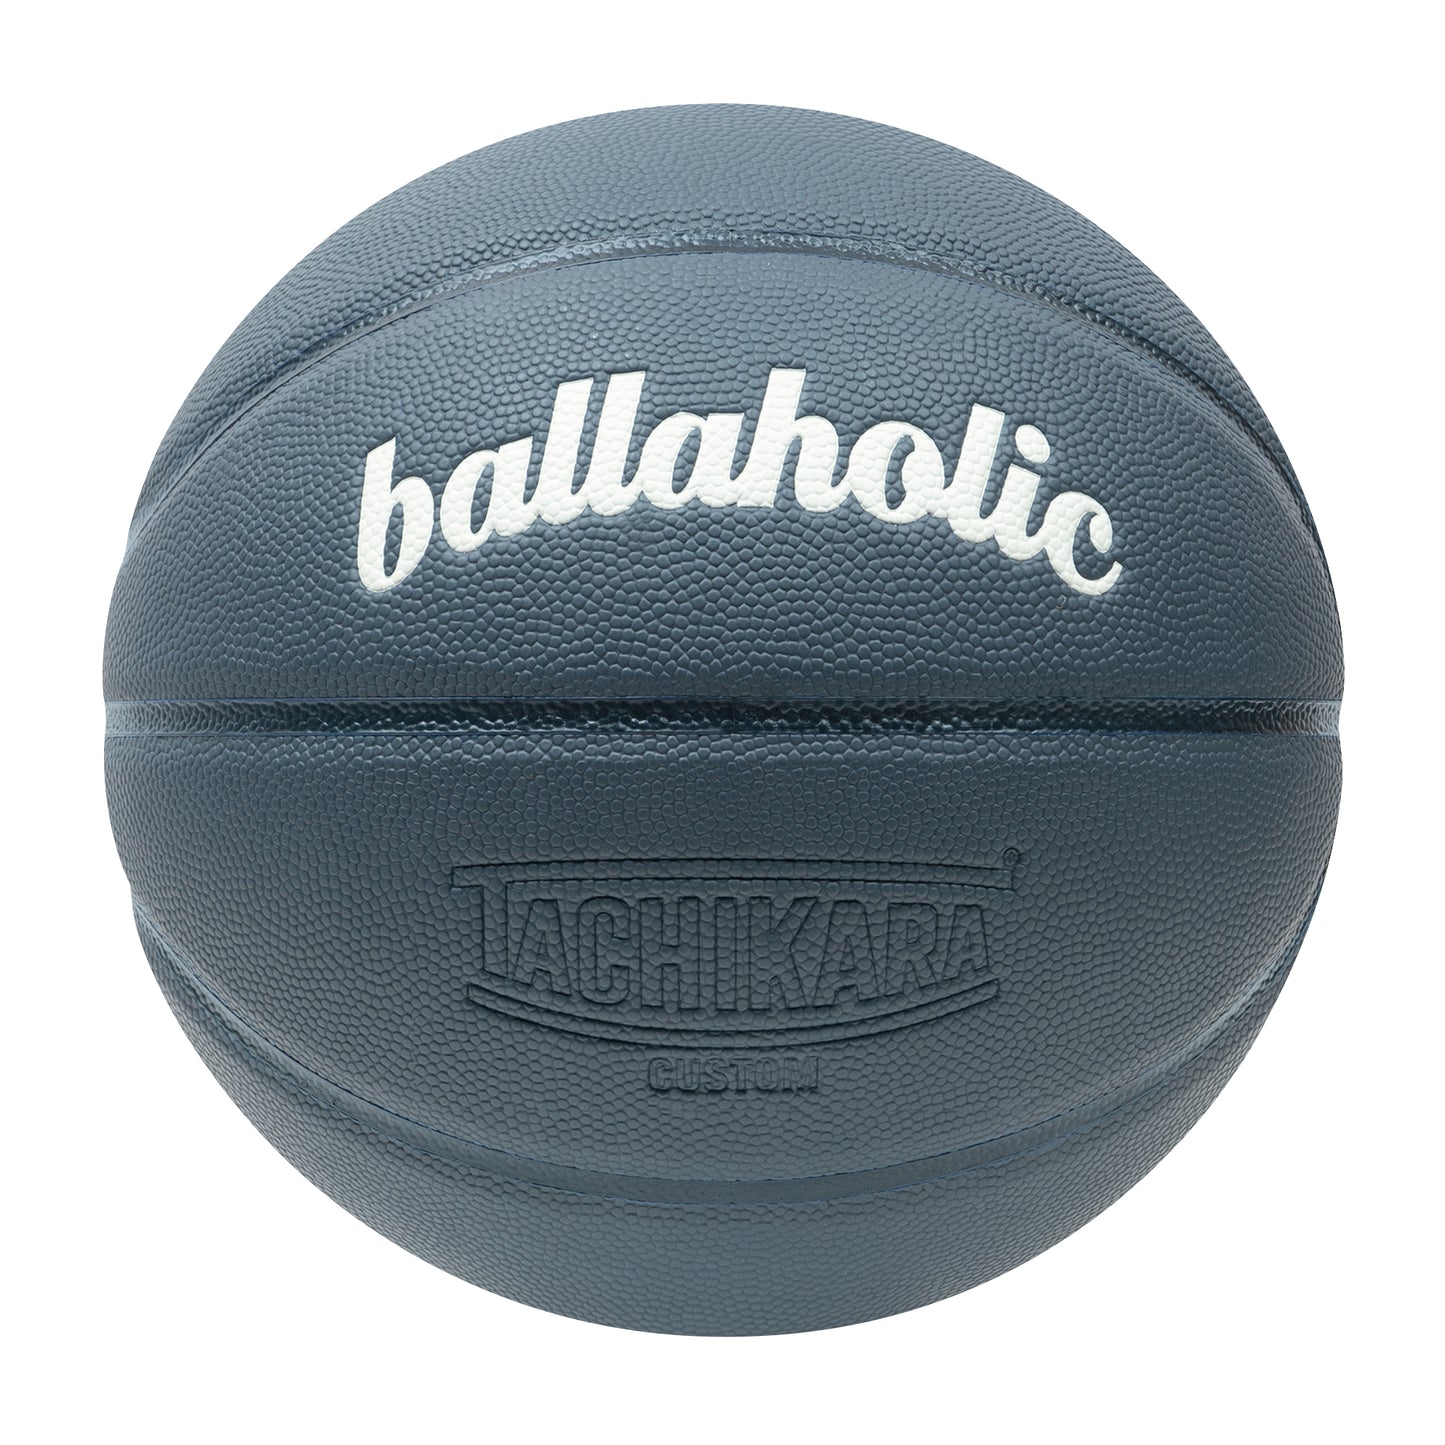 Playground Basketball / ballaholic x TACHIKARA(slate blue/dark navy/white)